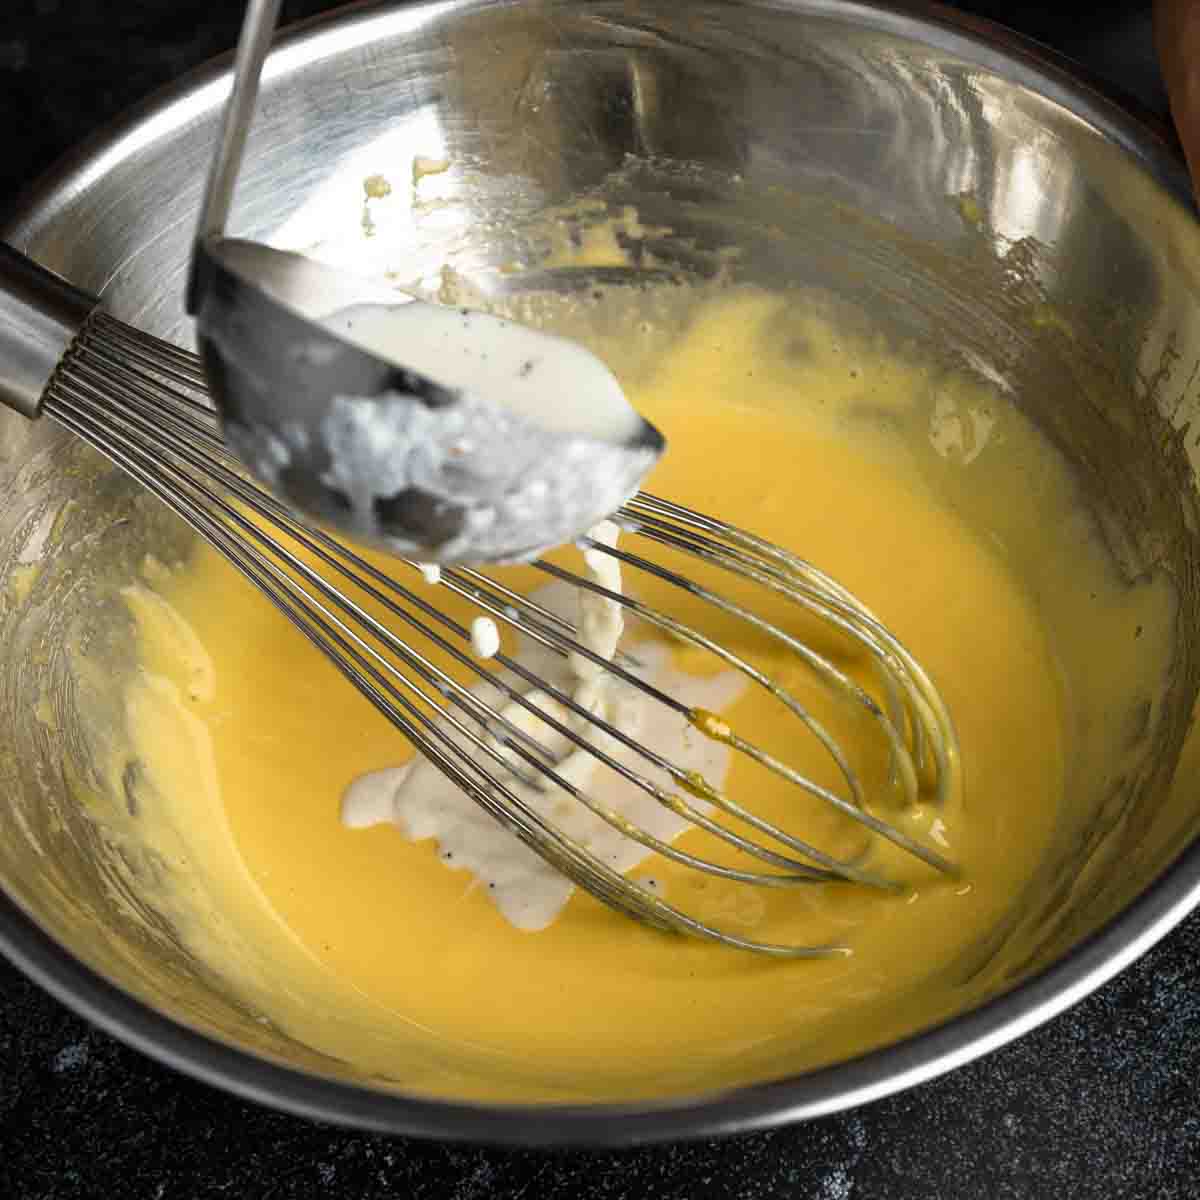 Ladling hot cream into the eggs to temper the custard